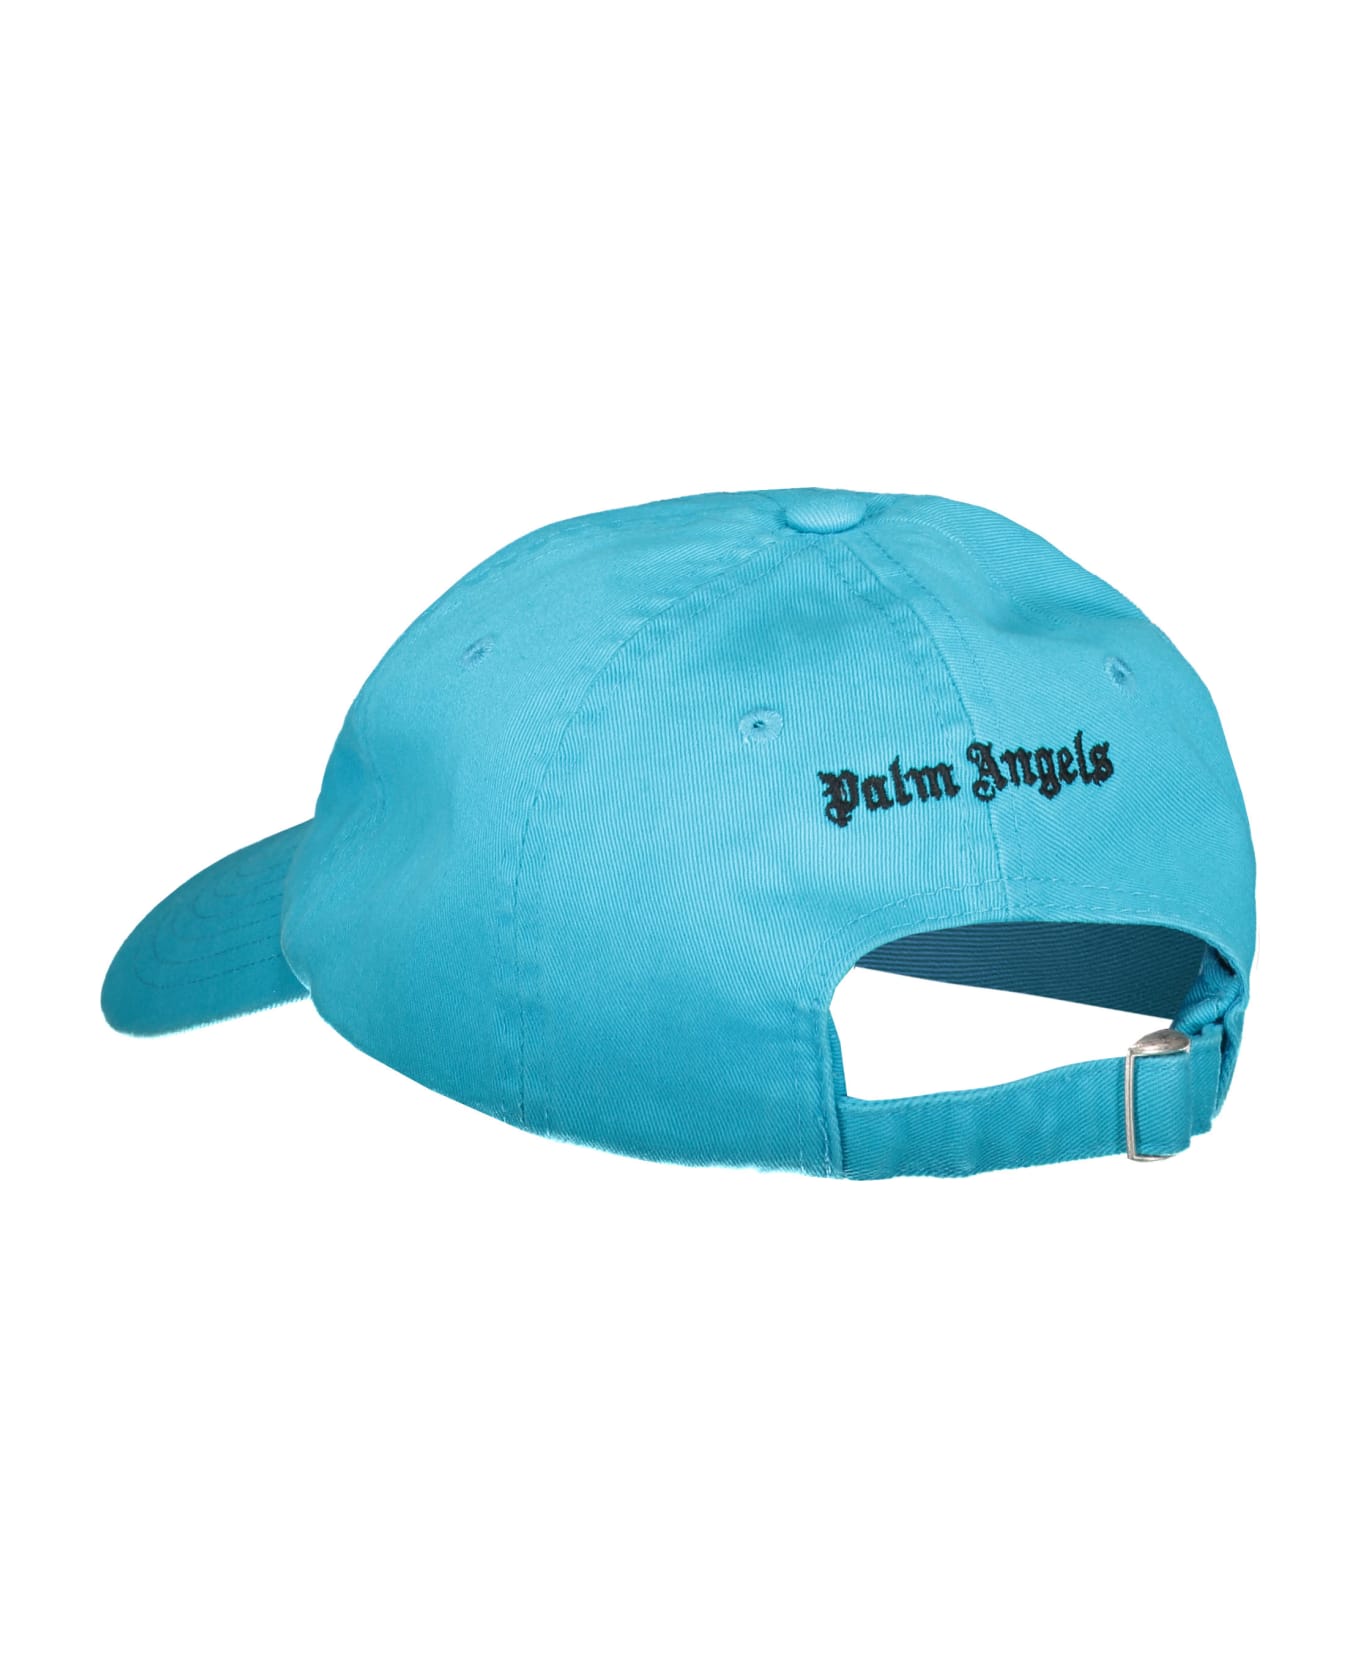 Palm Angels Embroidered Baseball Cap - Light Blue